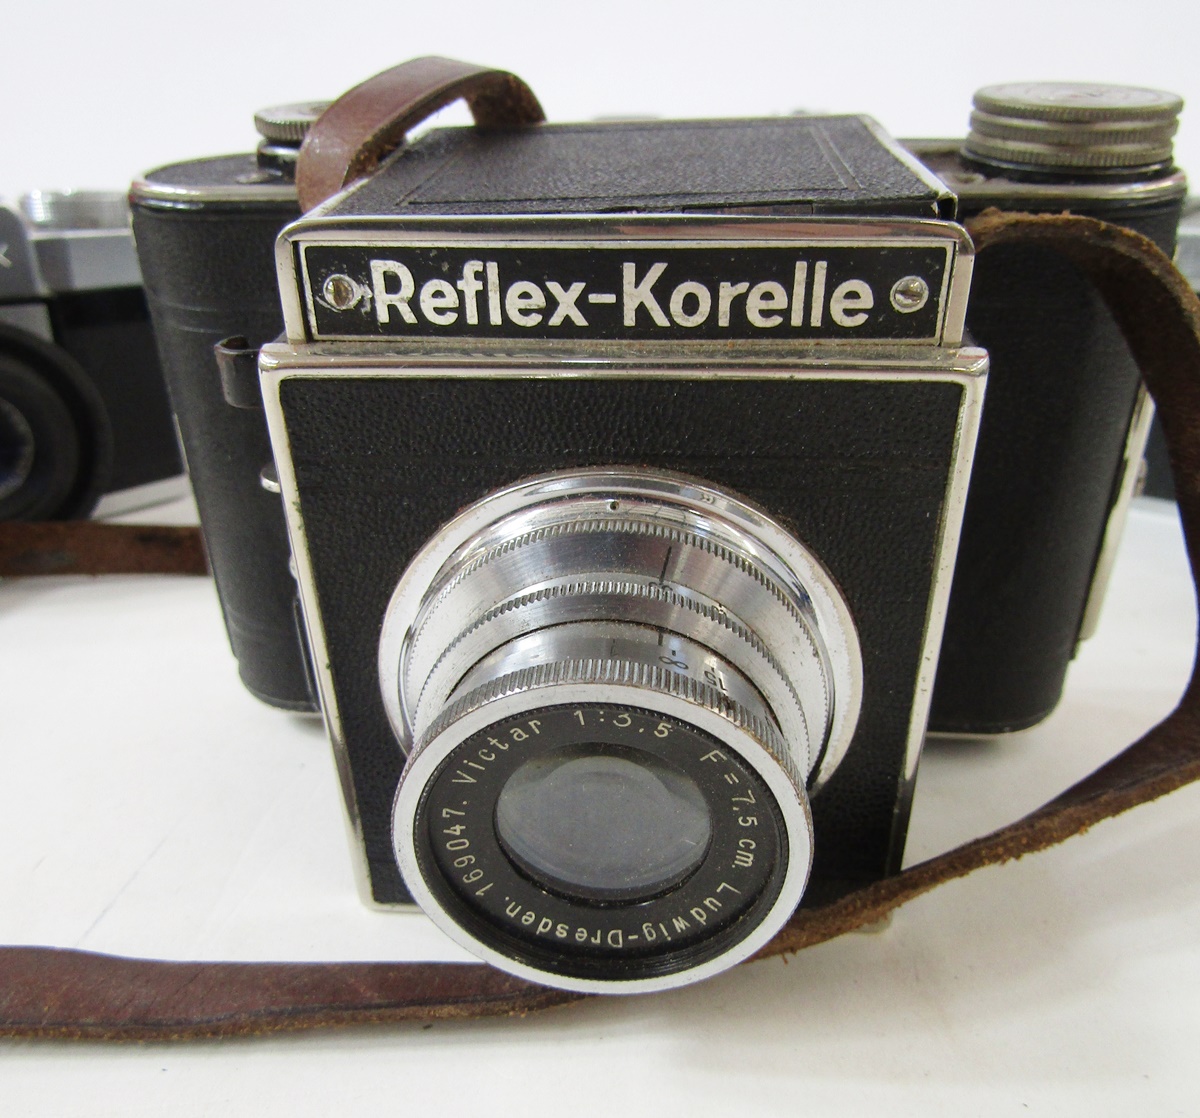 Reflex-Korelle SLR camera, with Victar 1:3,5 f=7.5cm lens, together with a Voigtlander Bessamatic, - Image 2 of 5